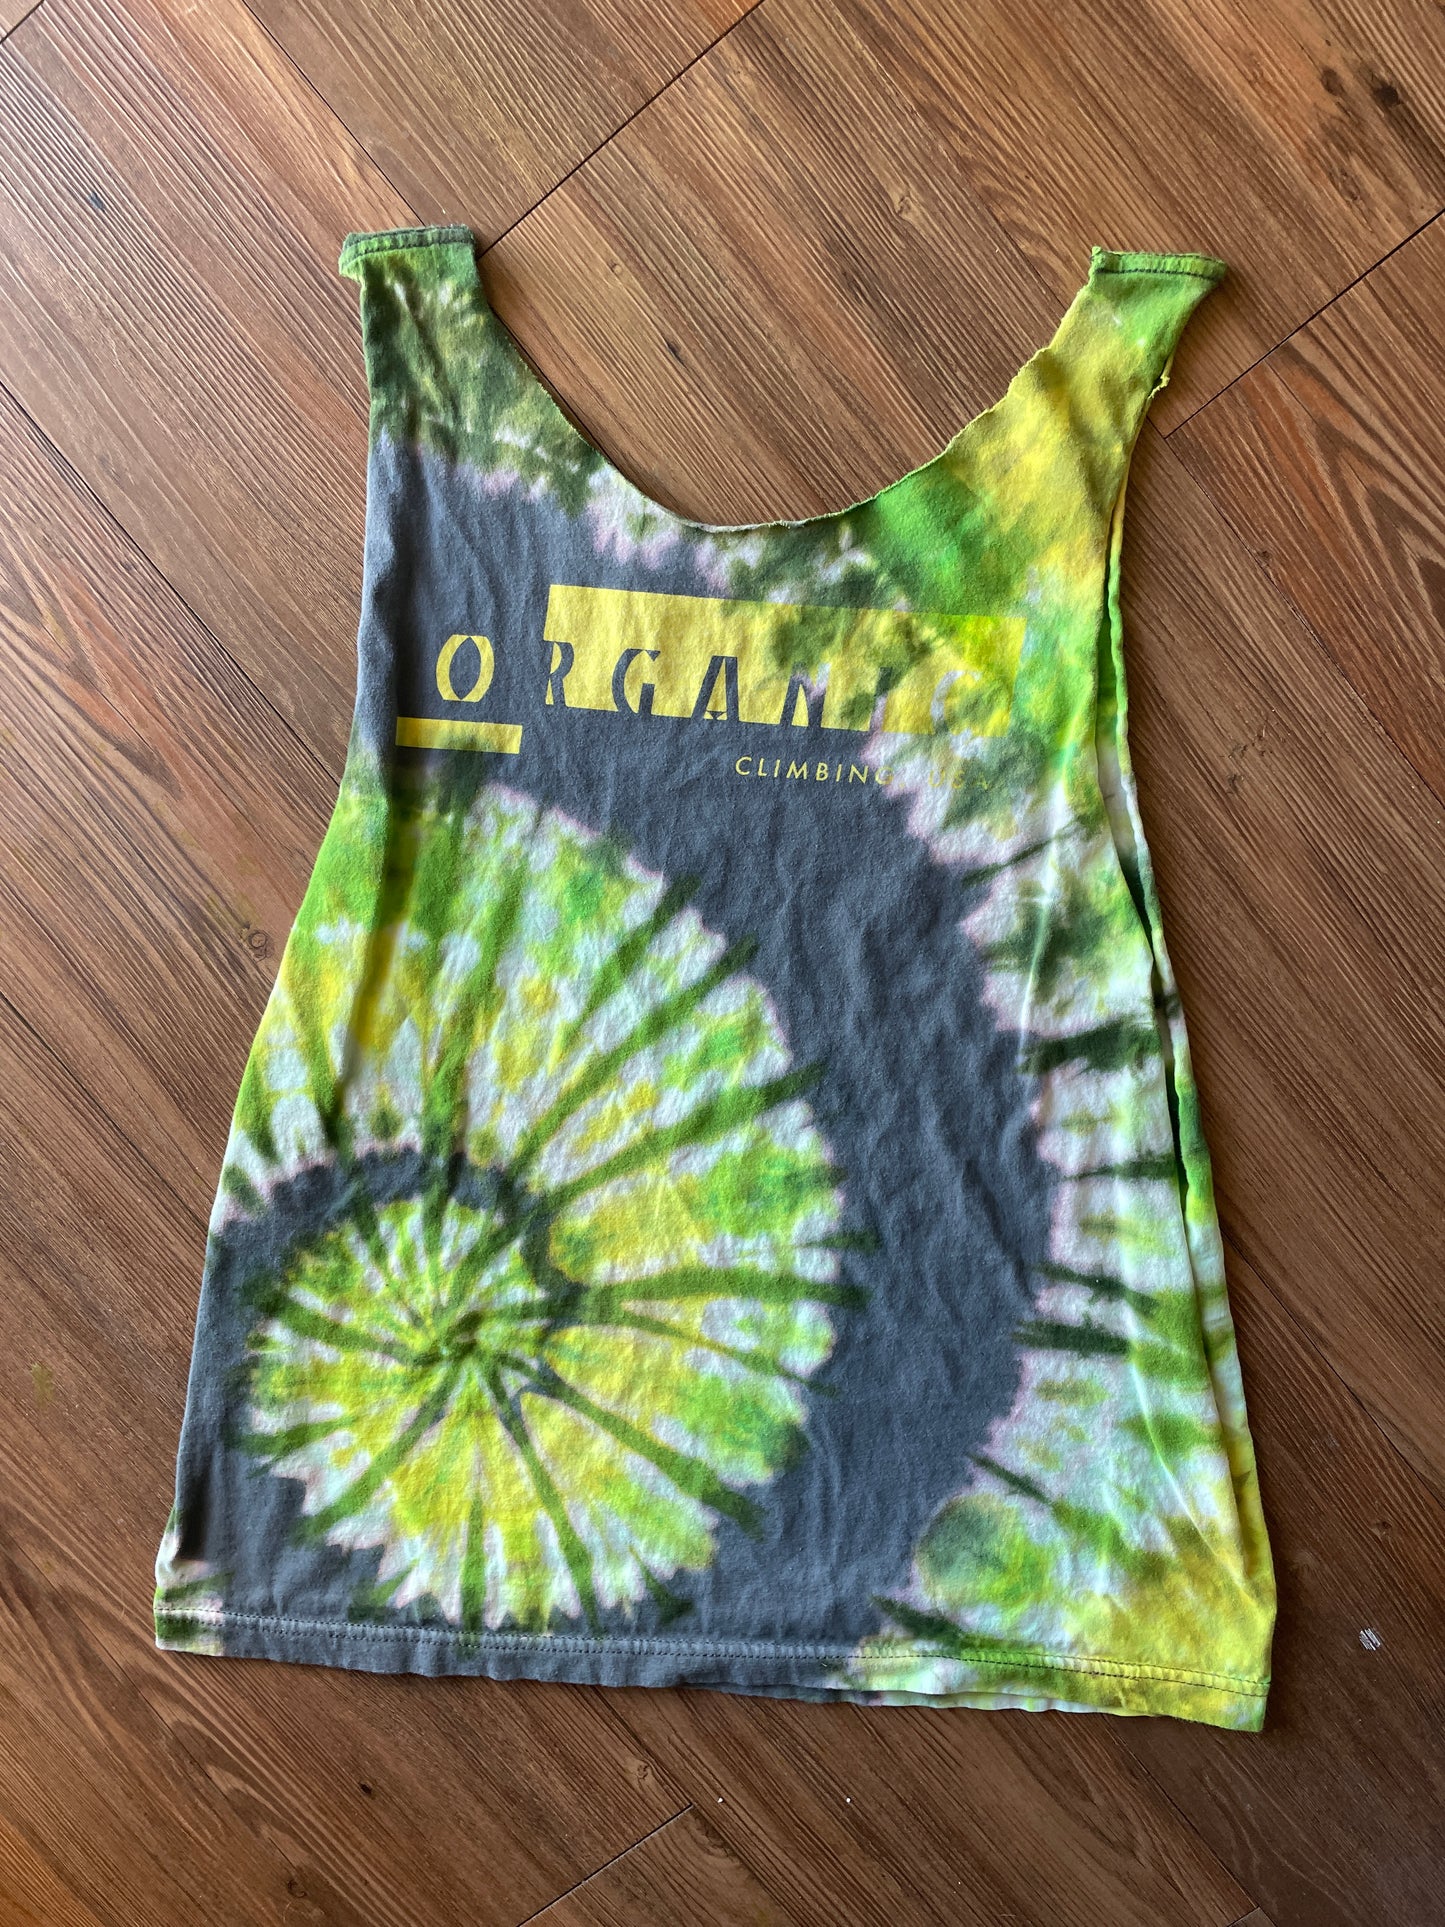 SMALL Men’s Organic Climbing Handmade Tie Dye Cut-Off T-Shirt | One-Of-a-Kind Gray, Green, and Yellow Tank Top